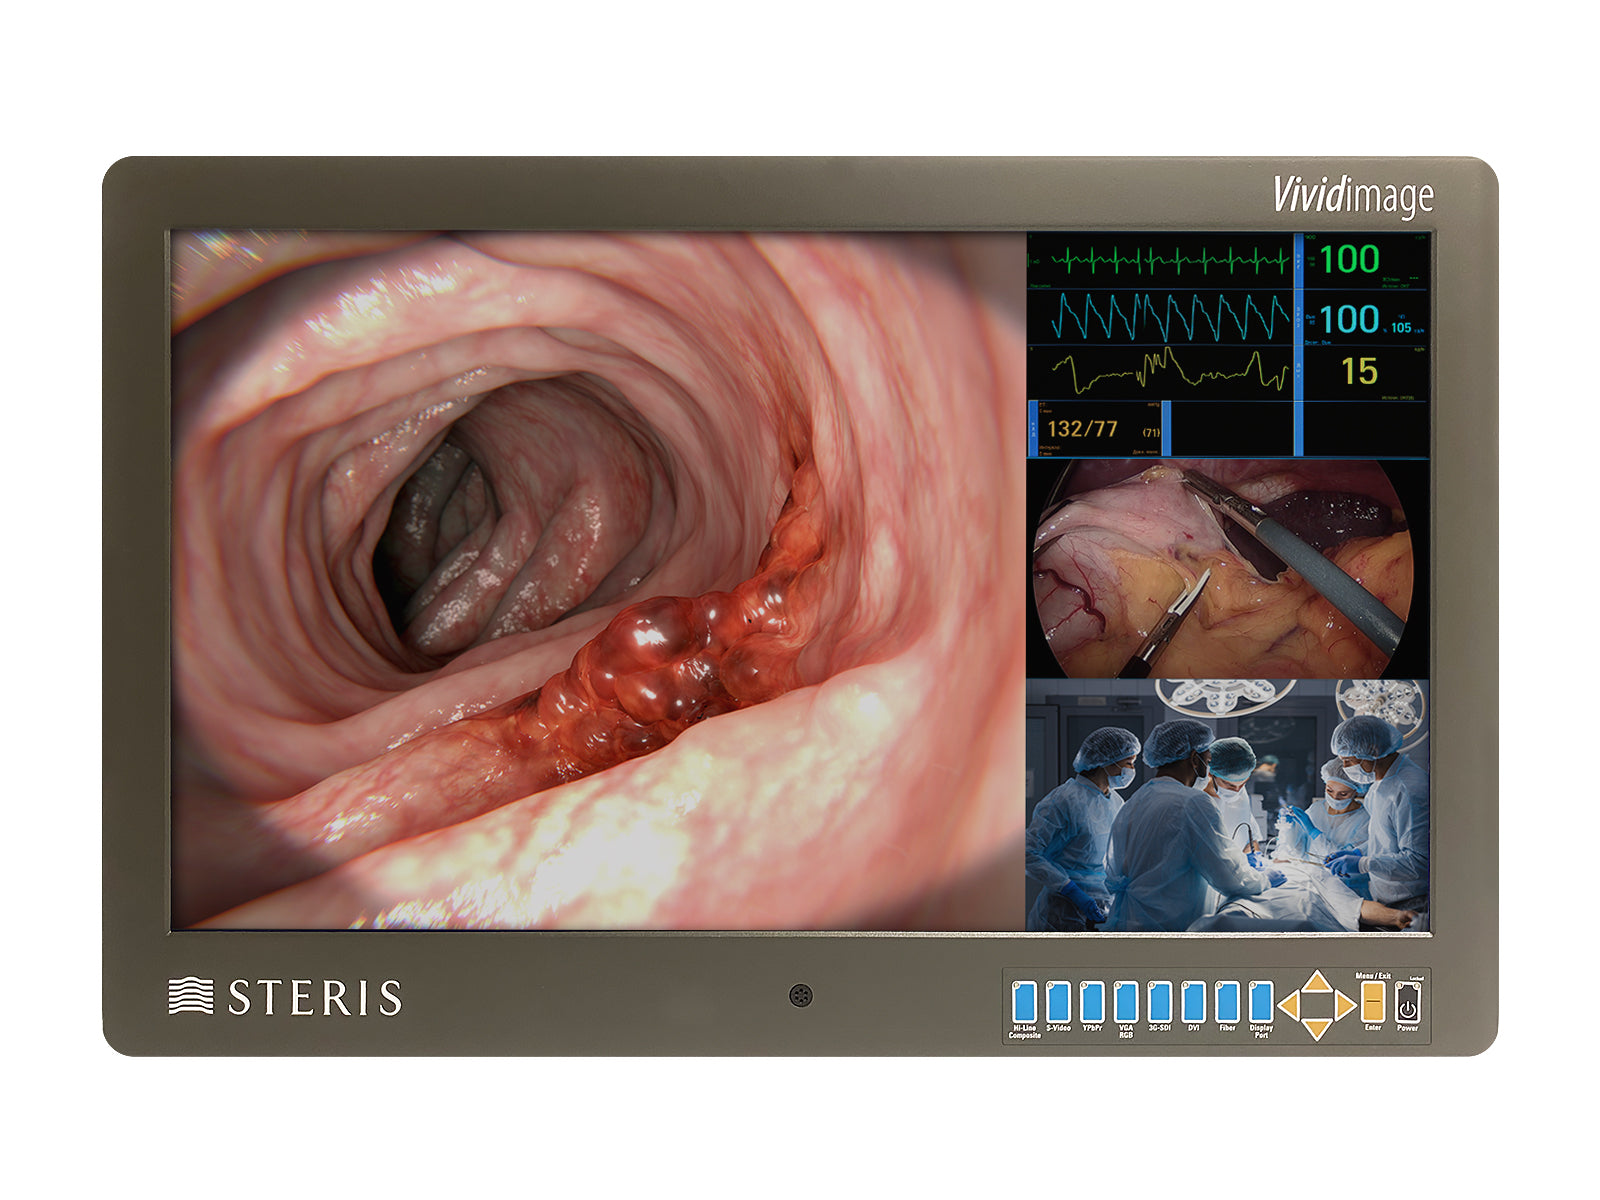 Steris Vividimage STERIS-27-HDD-R 27" Color Surgical Display Monitor (RLM27HDNPWR) Monitors.com 